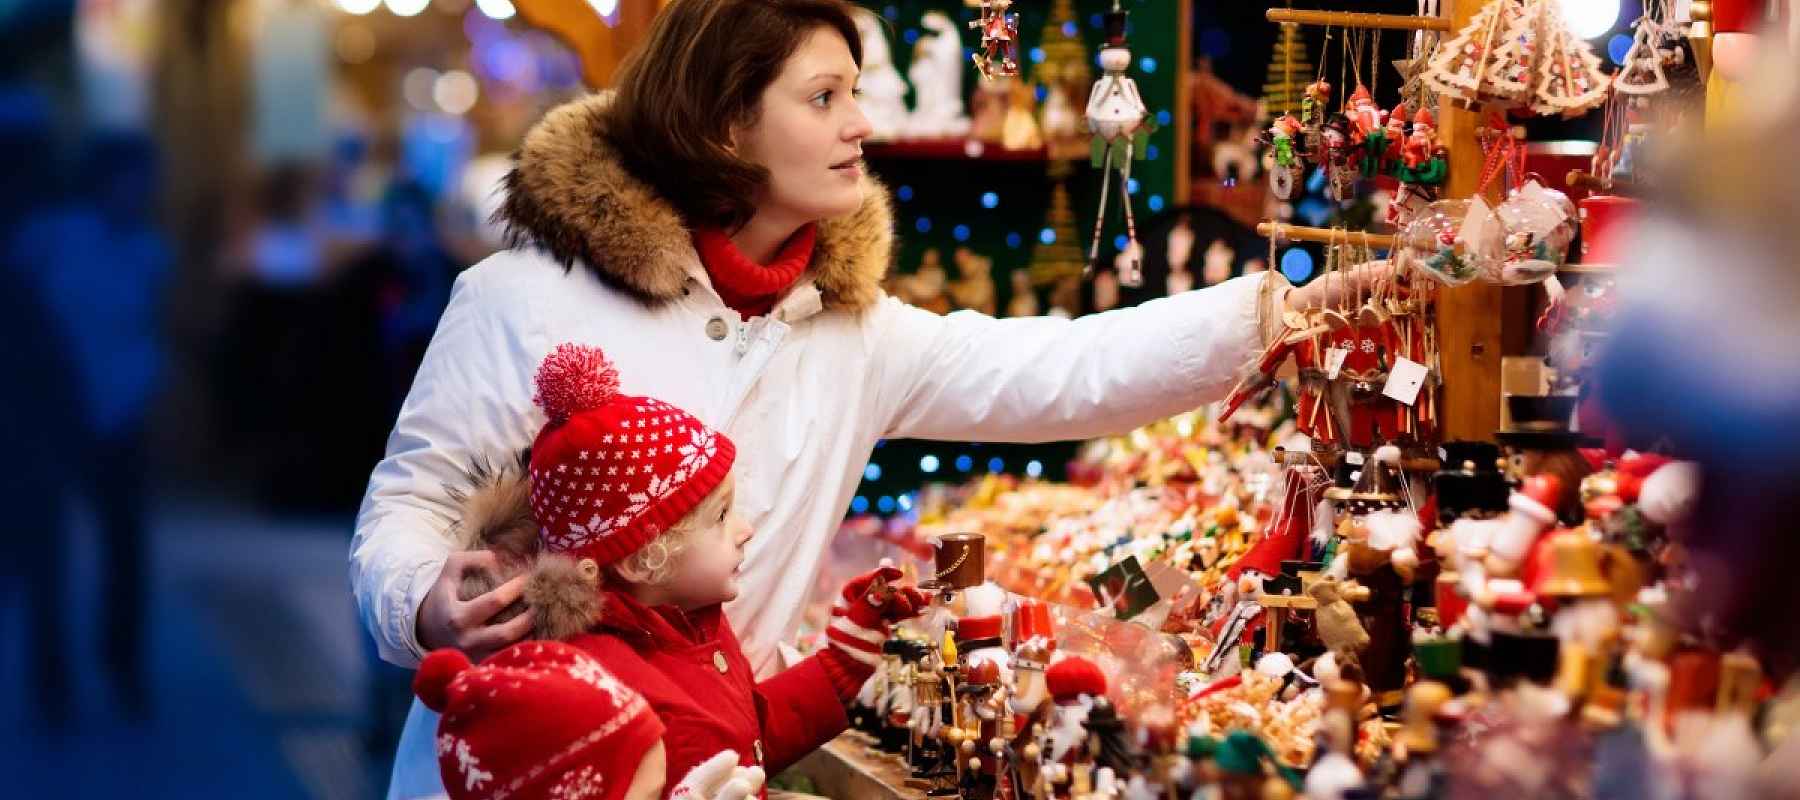 Will Delaying Tariffs Save the Christmas Shopping Season?